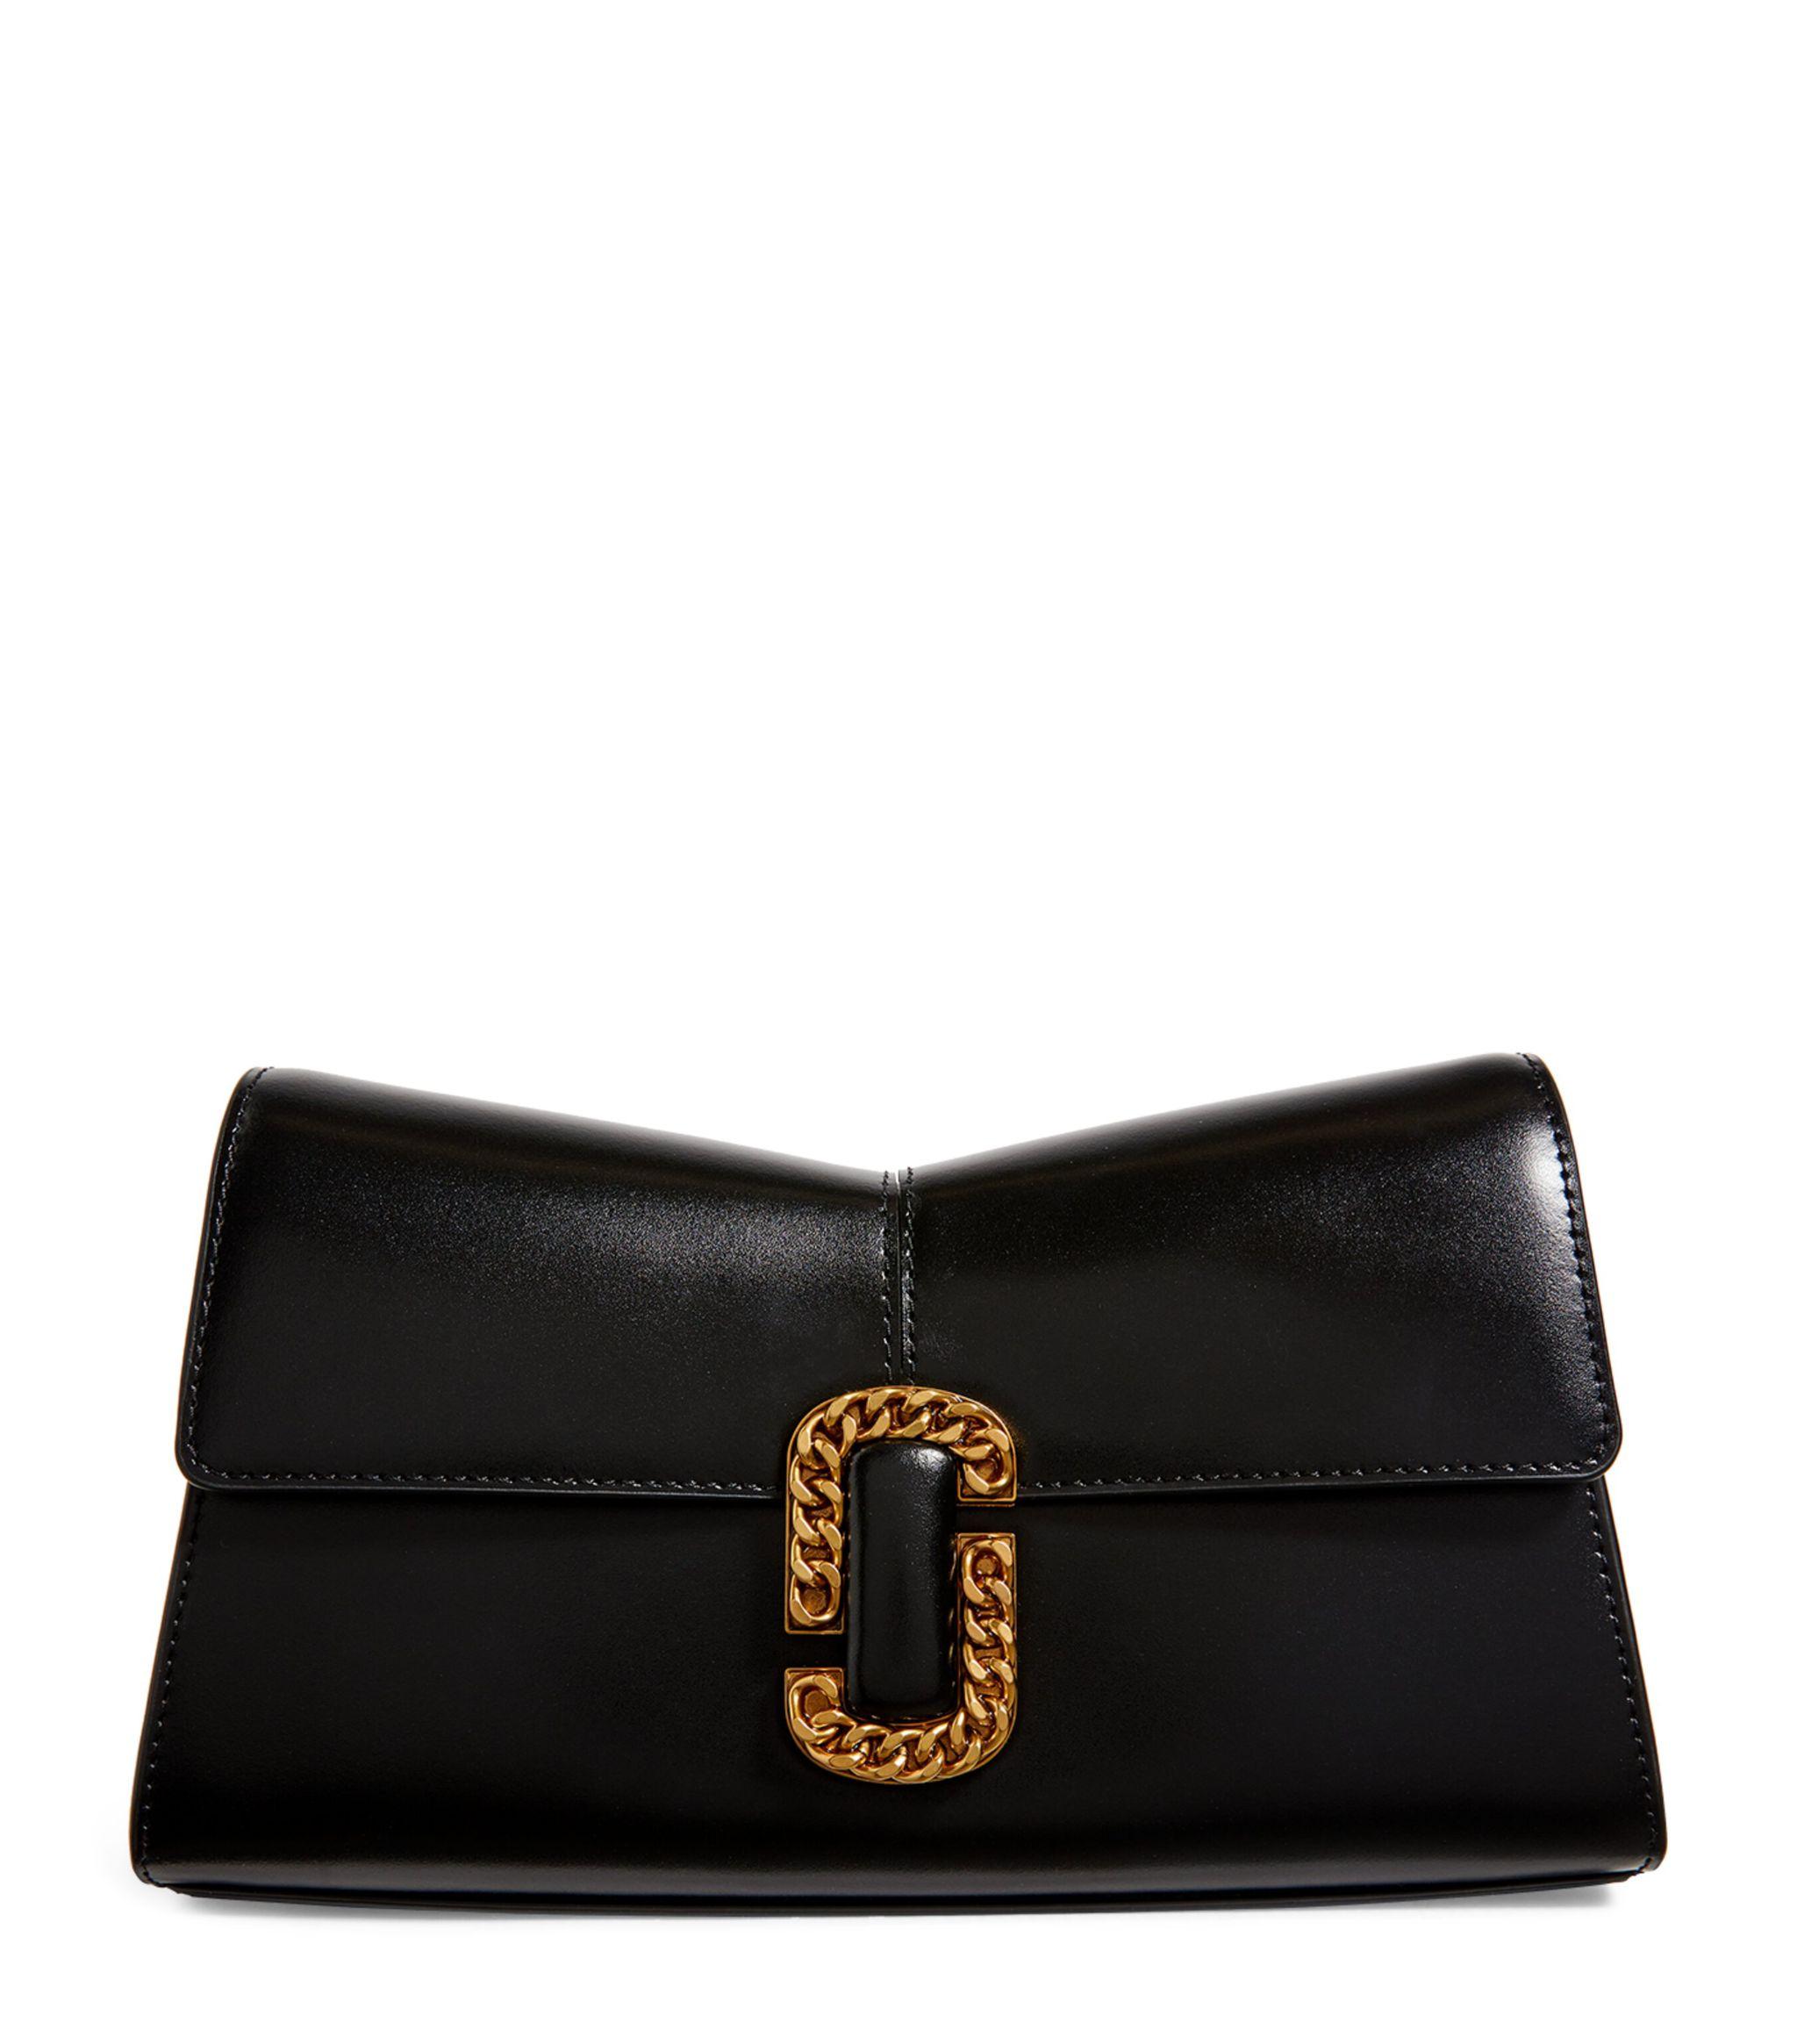 Marc Jacobs Leather Clutch - Black Clutches, Handbags - MAR177375